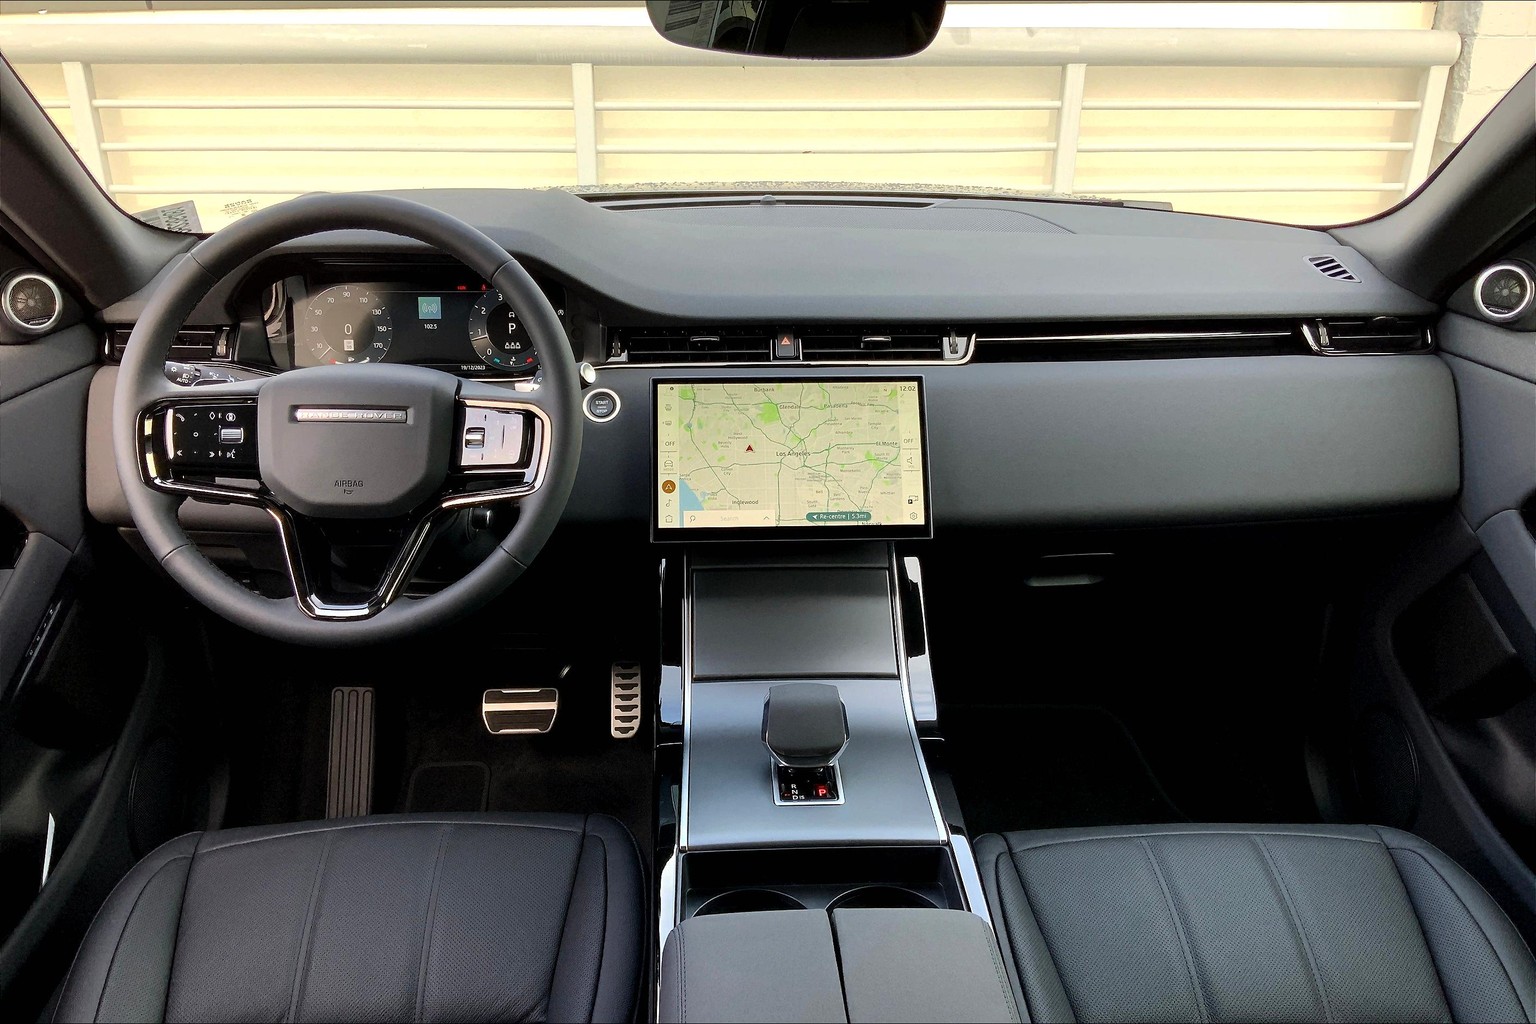 GENTRE Car Cover Seats for Tesla Model 3 2019 2020 2021 2022 2023